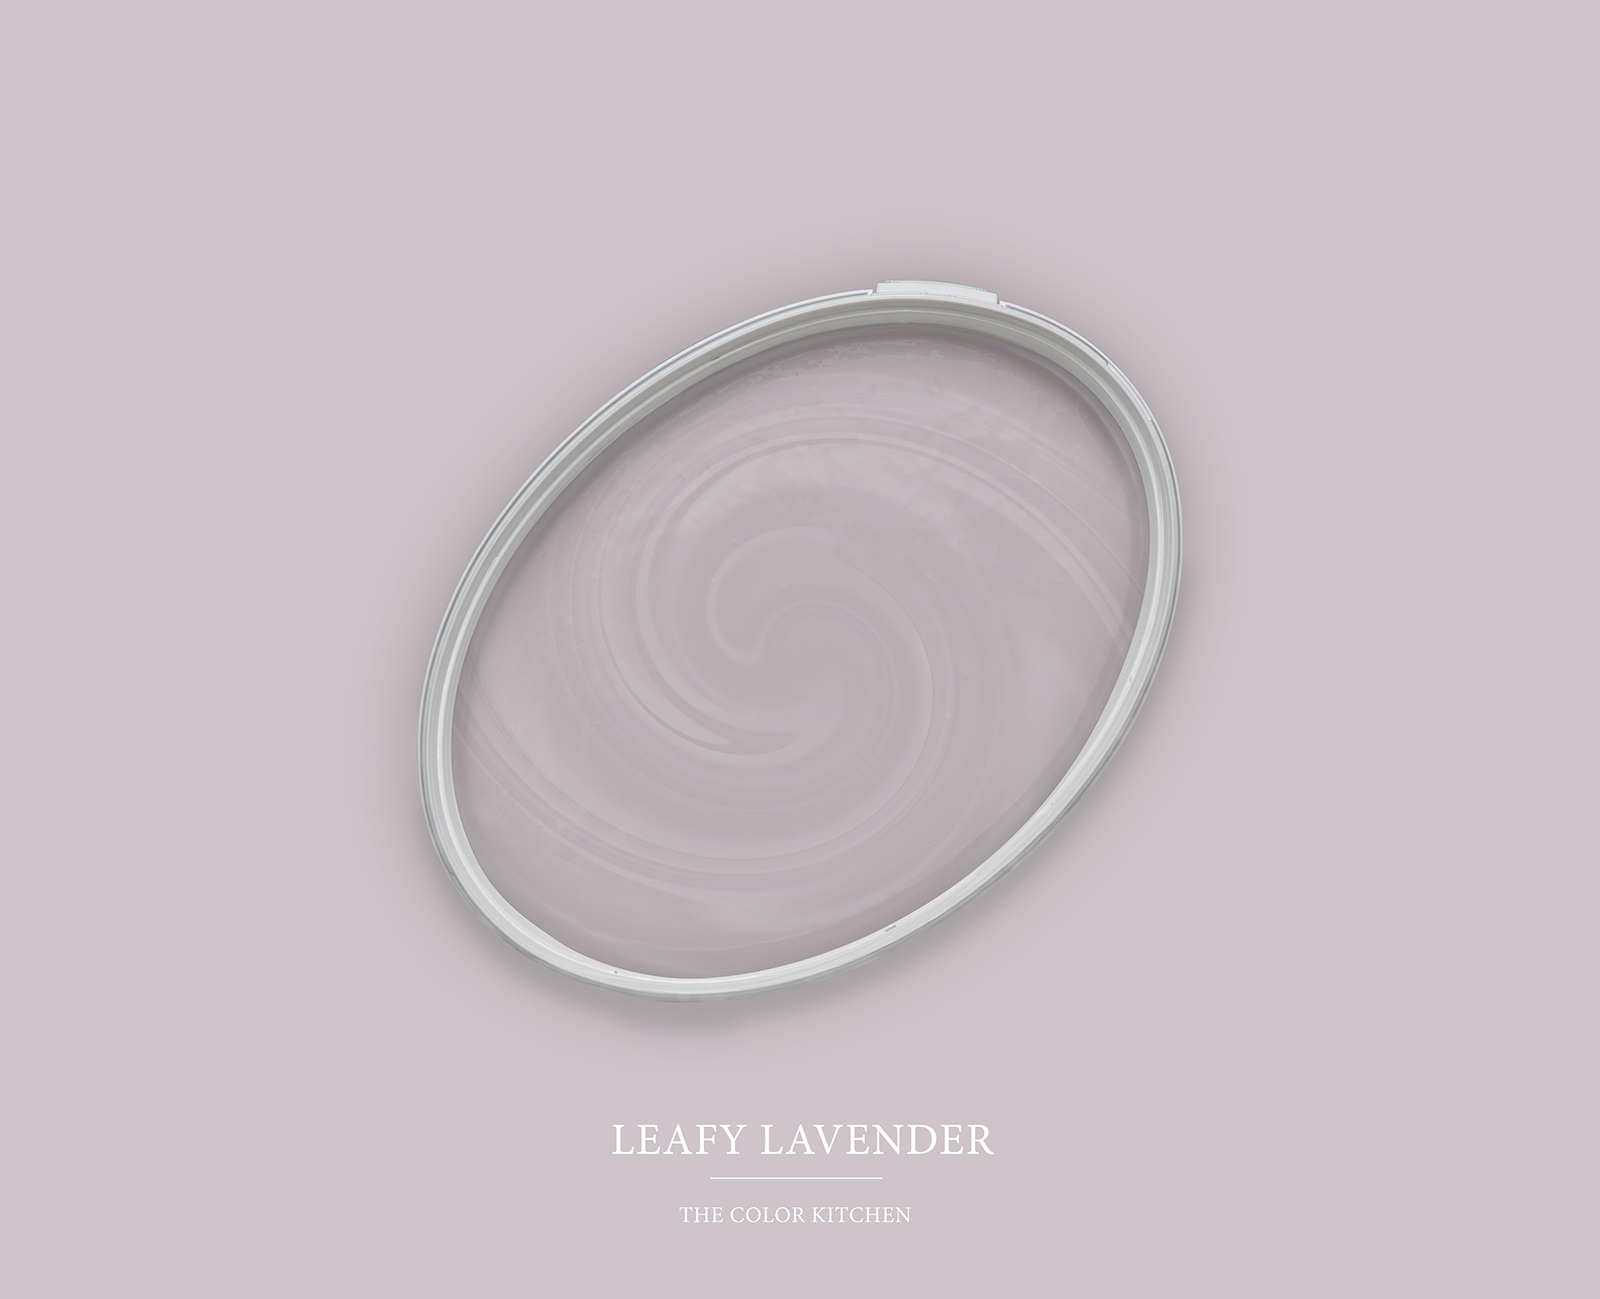 Muurverf TCK2004 »Leafy Lavender« in koele lavendeltint – 5,0 liter
